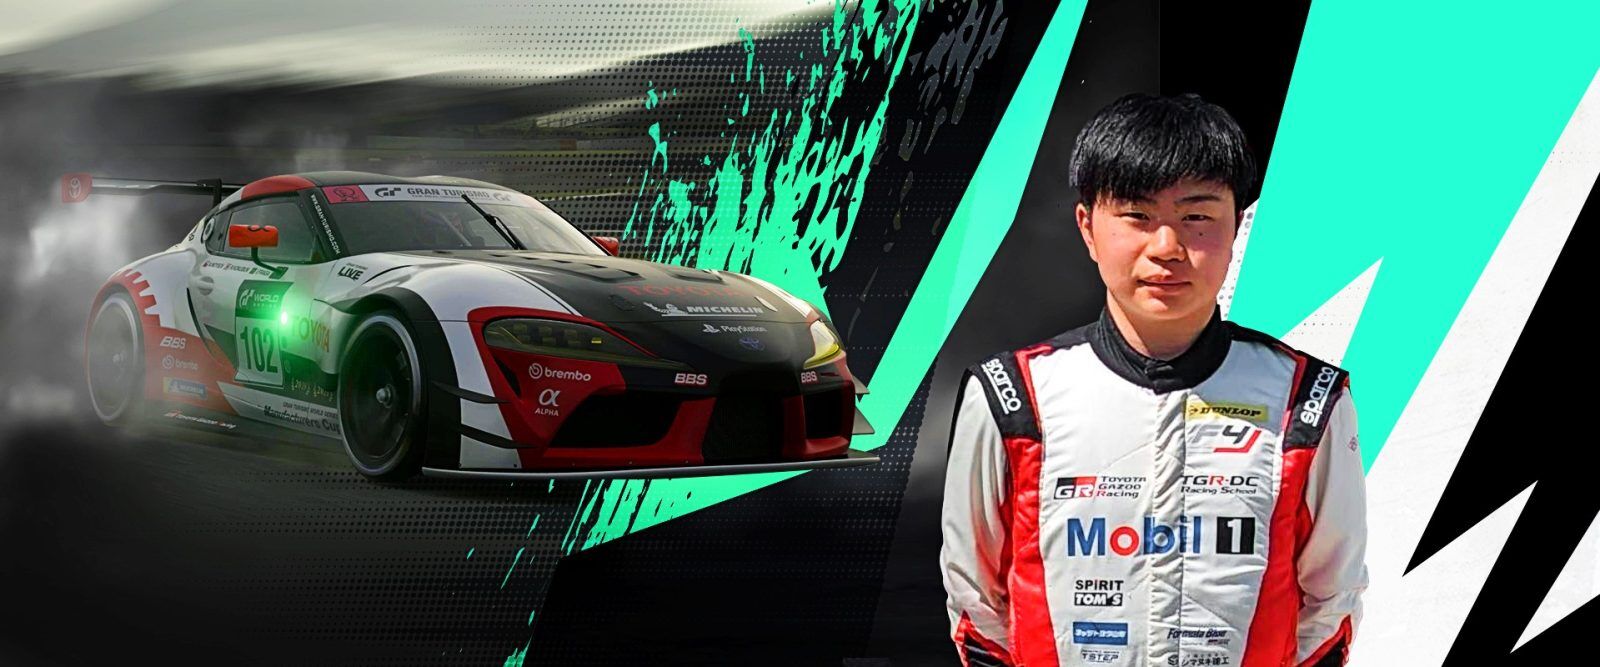 An image of Rikuto Kobayashi next to a car in Gran Turismo.